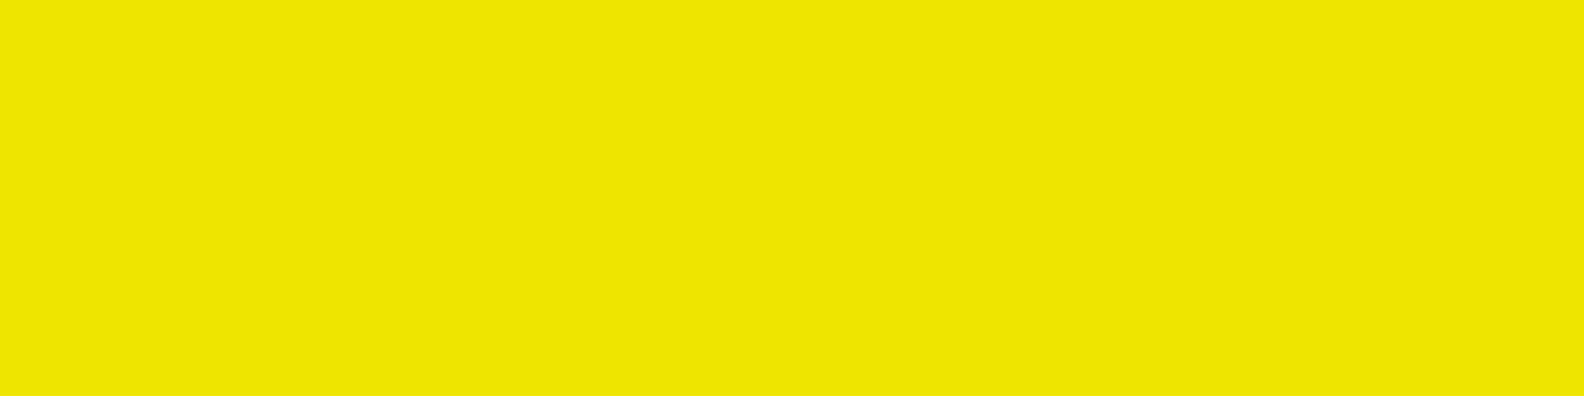 1584x396 Titanium Yellow Solid Color Background